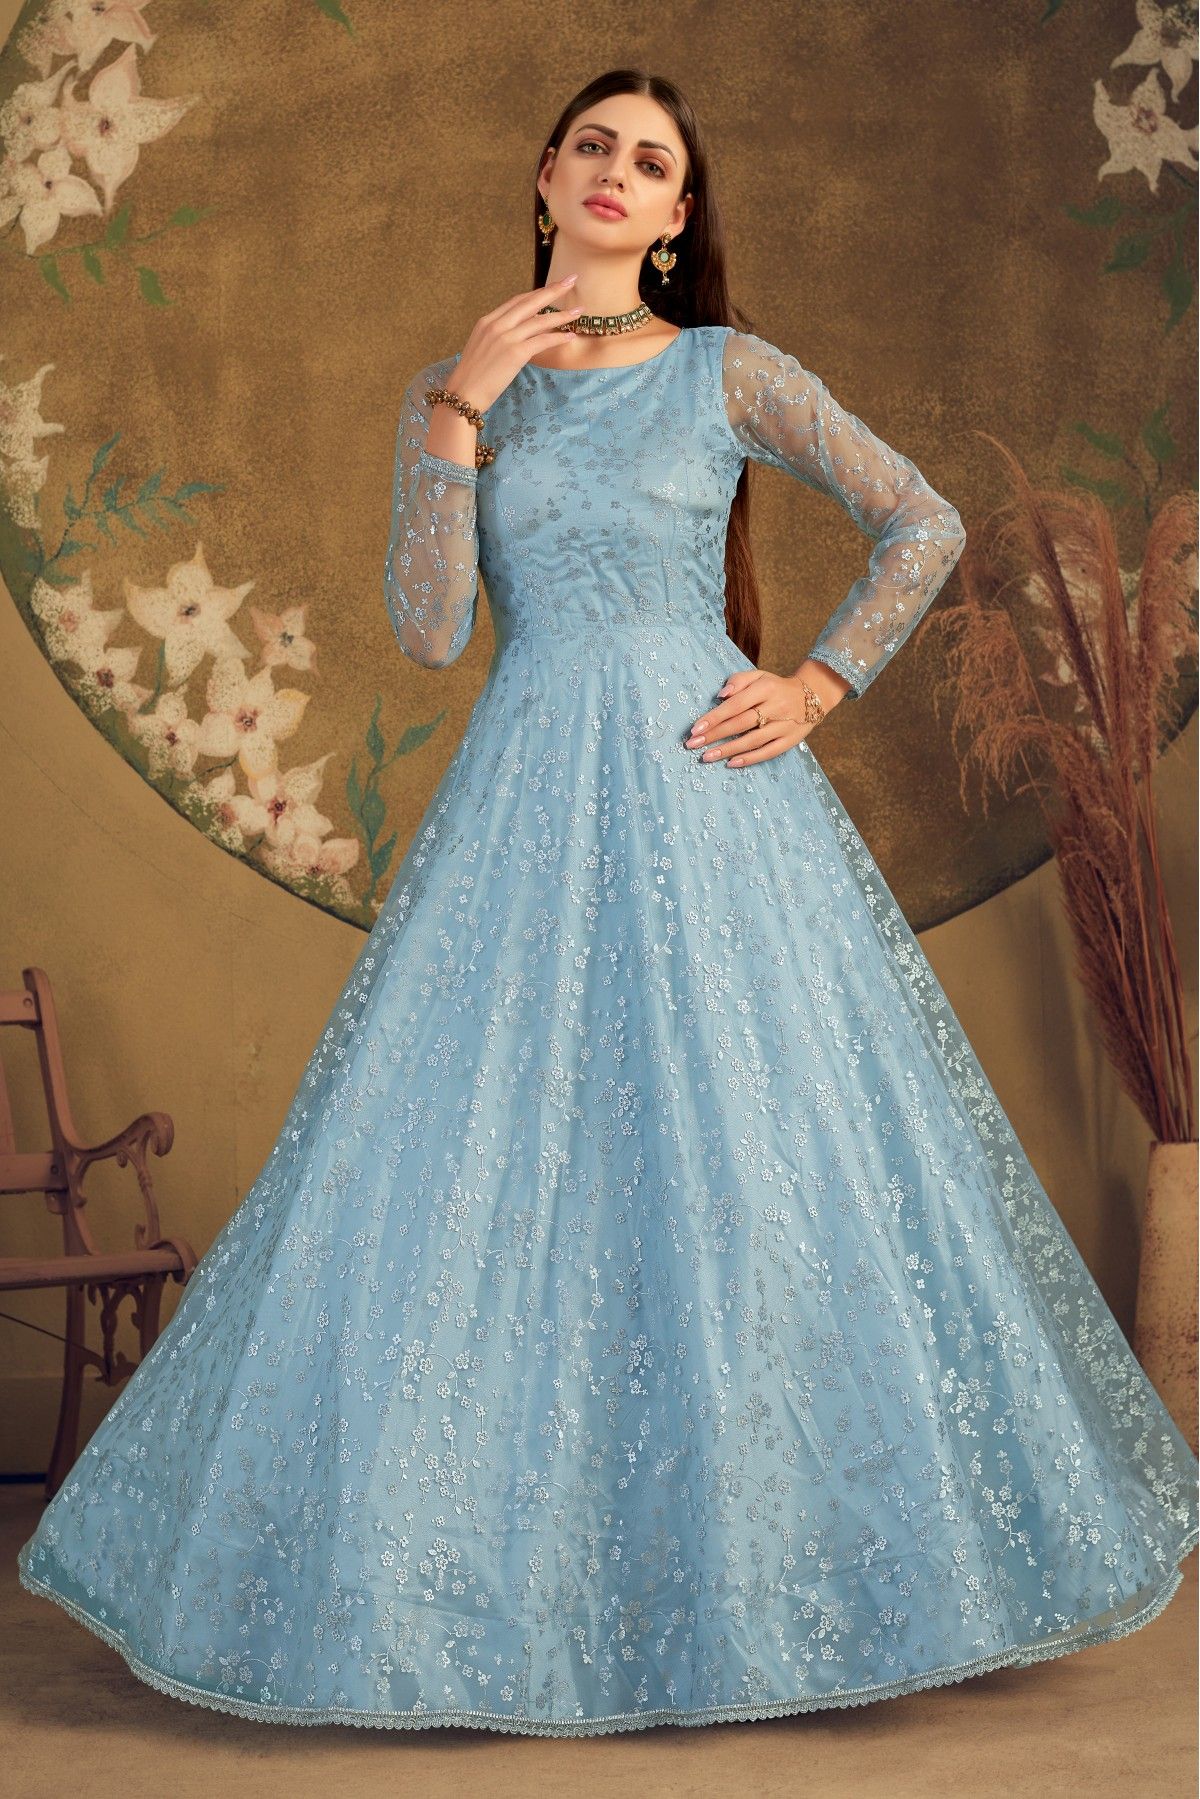 Details 152+ sky blue color gown super hot